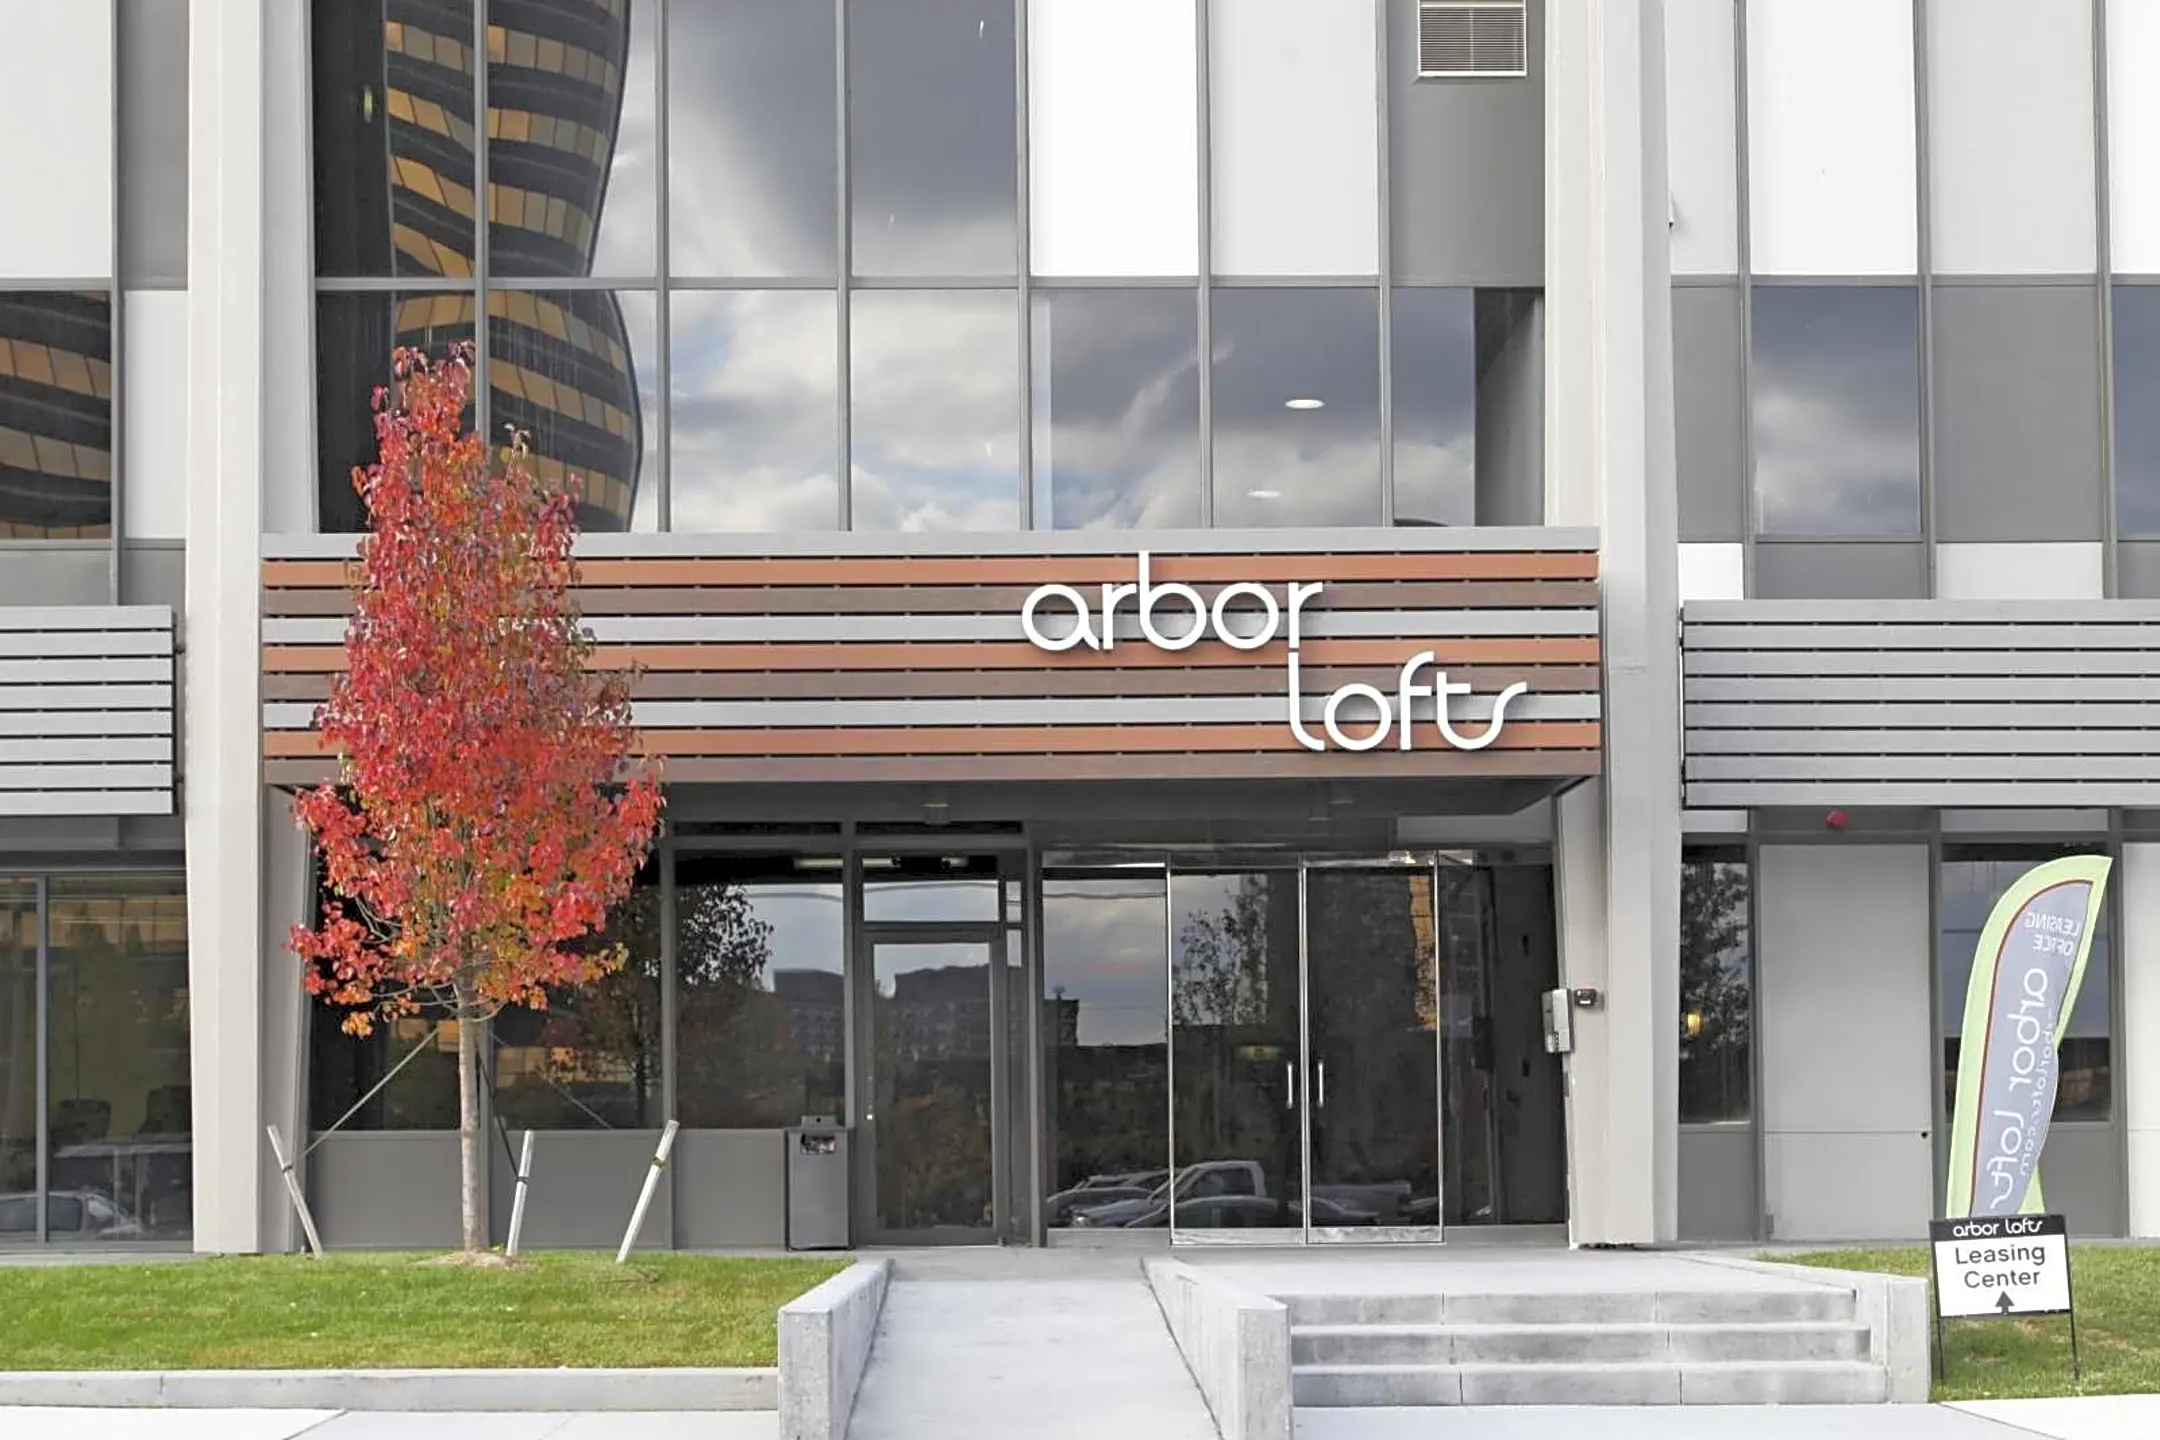 Building - Arbor Lofts - Southfield, MI